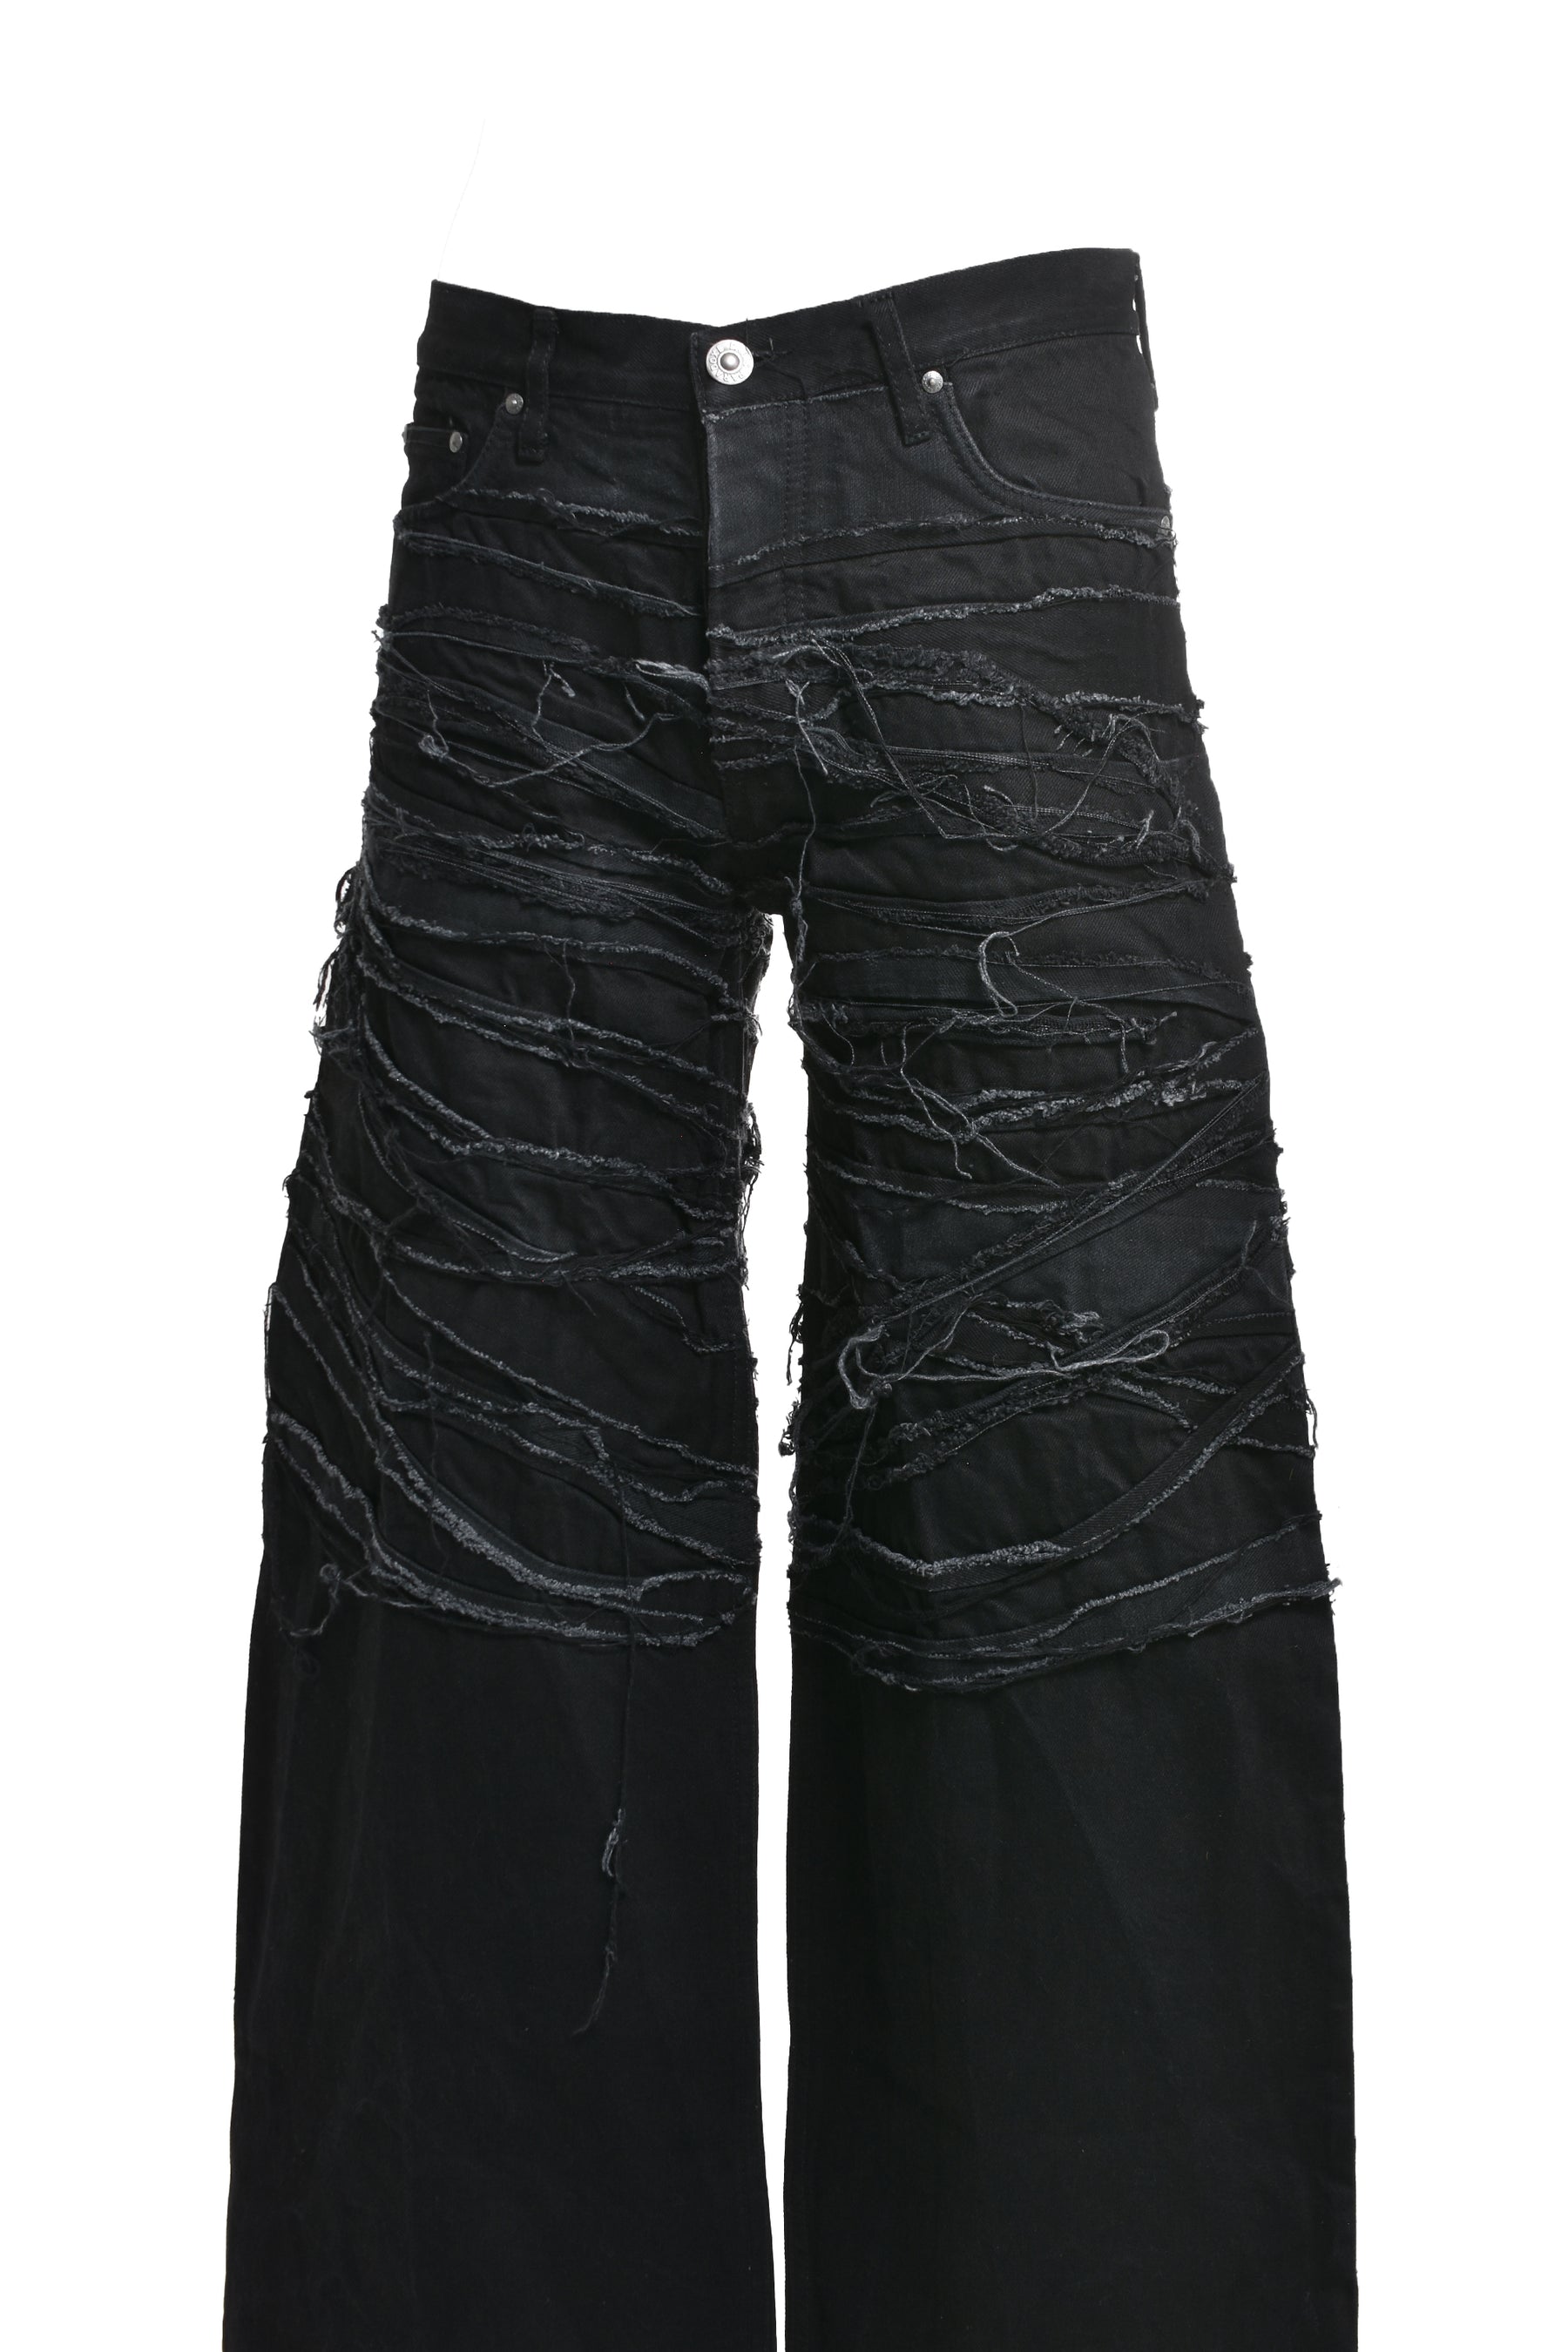 Cyprus Women's Baggy Jeans y2k Oversize Pants Korean Fashion Vintage Denim  Trousers Clothes Streetwear